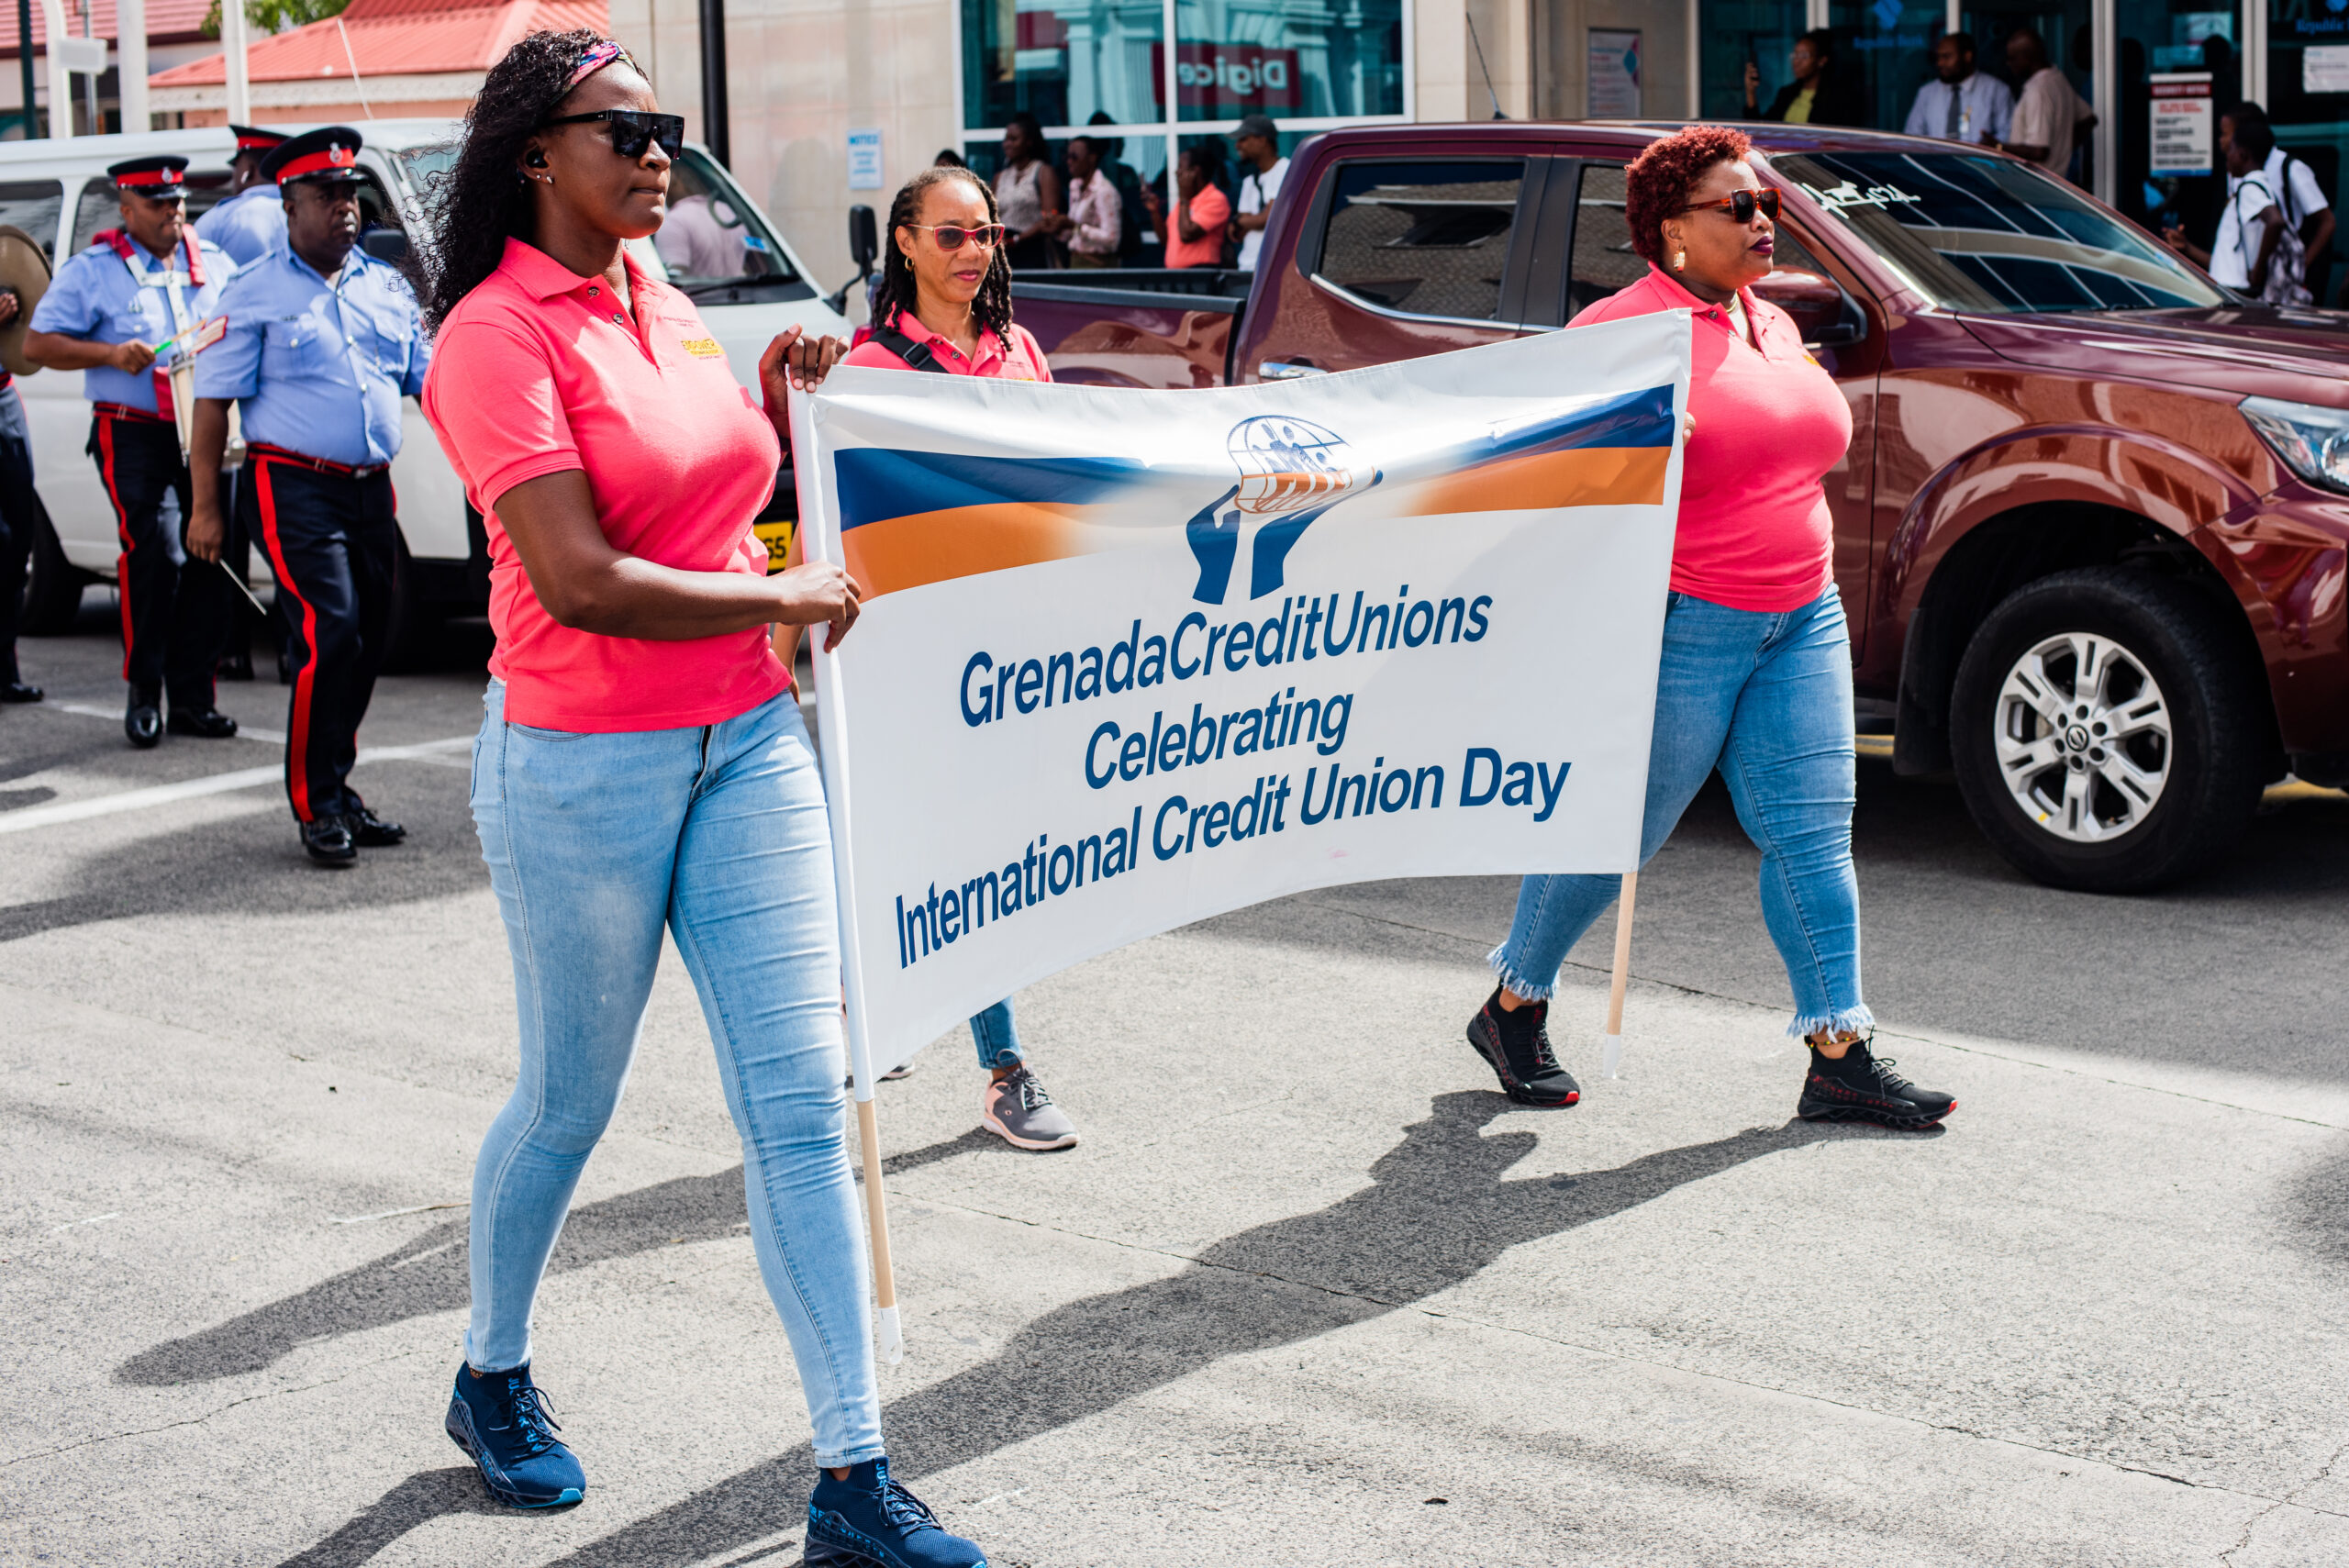 International Credit Union Day 2022 celebrations Grenada (Oct. 2022)